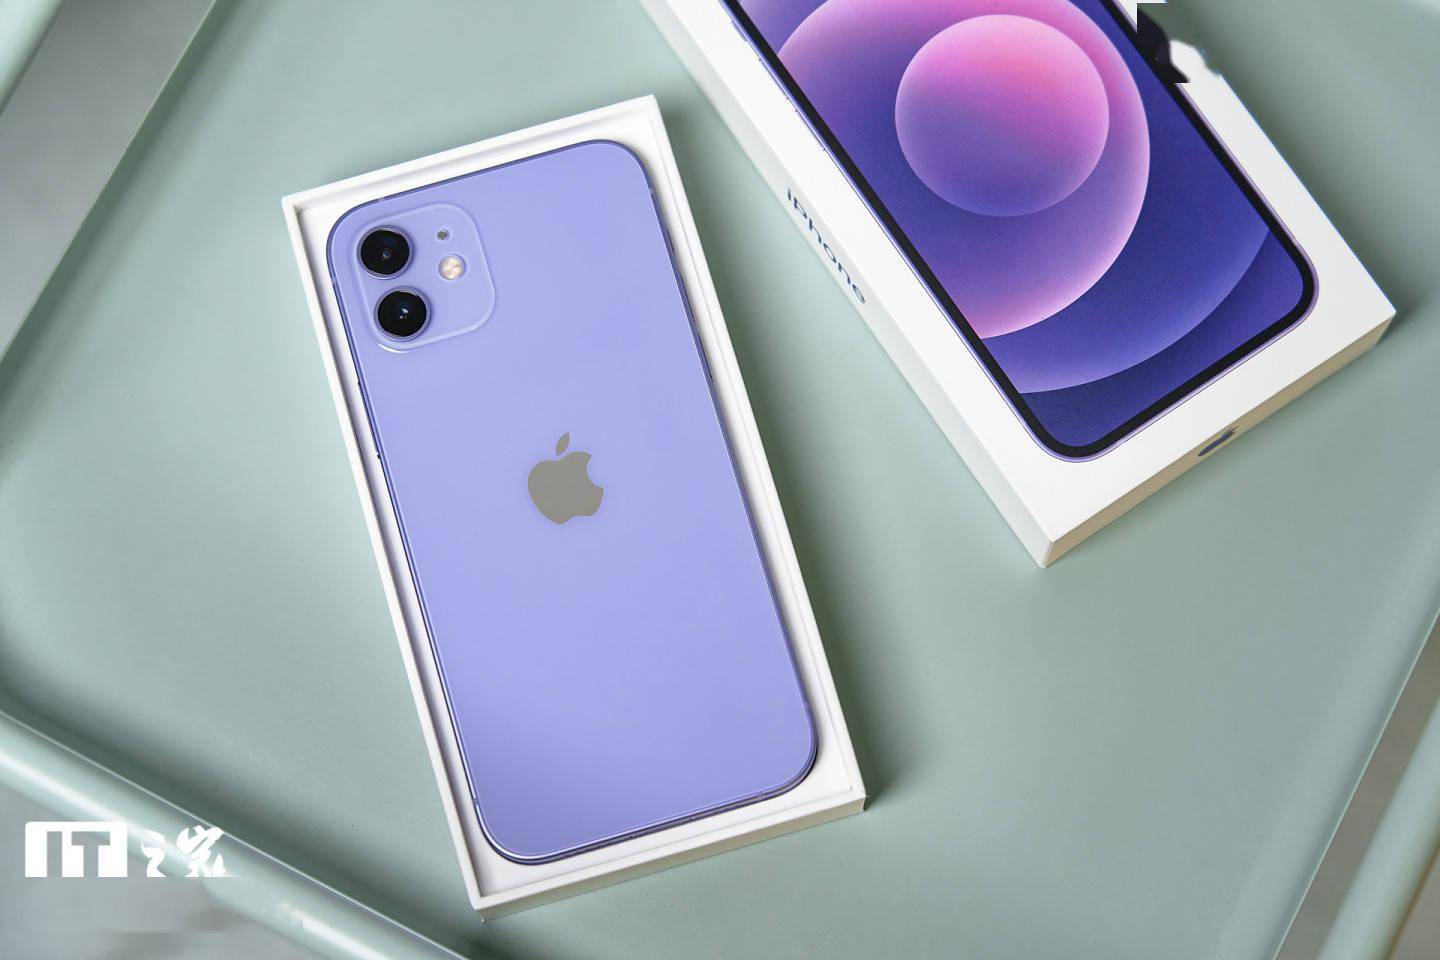 It之家开箱 紫色苹果iphone 12图赏 就像春天里的丁香花 色泽